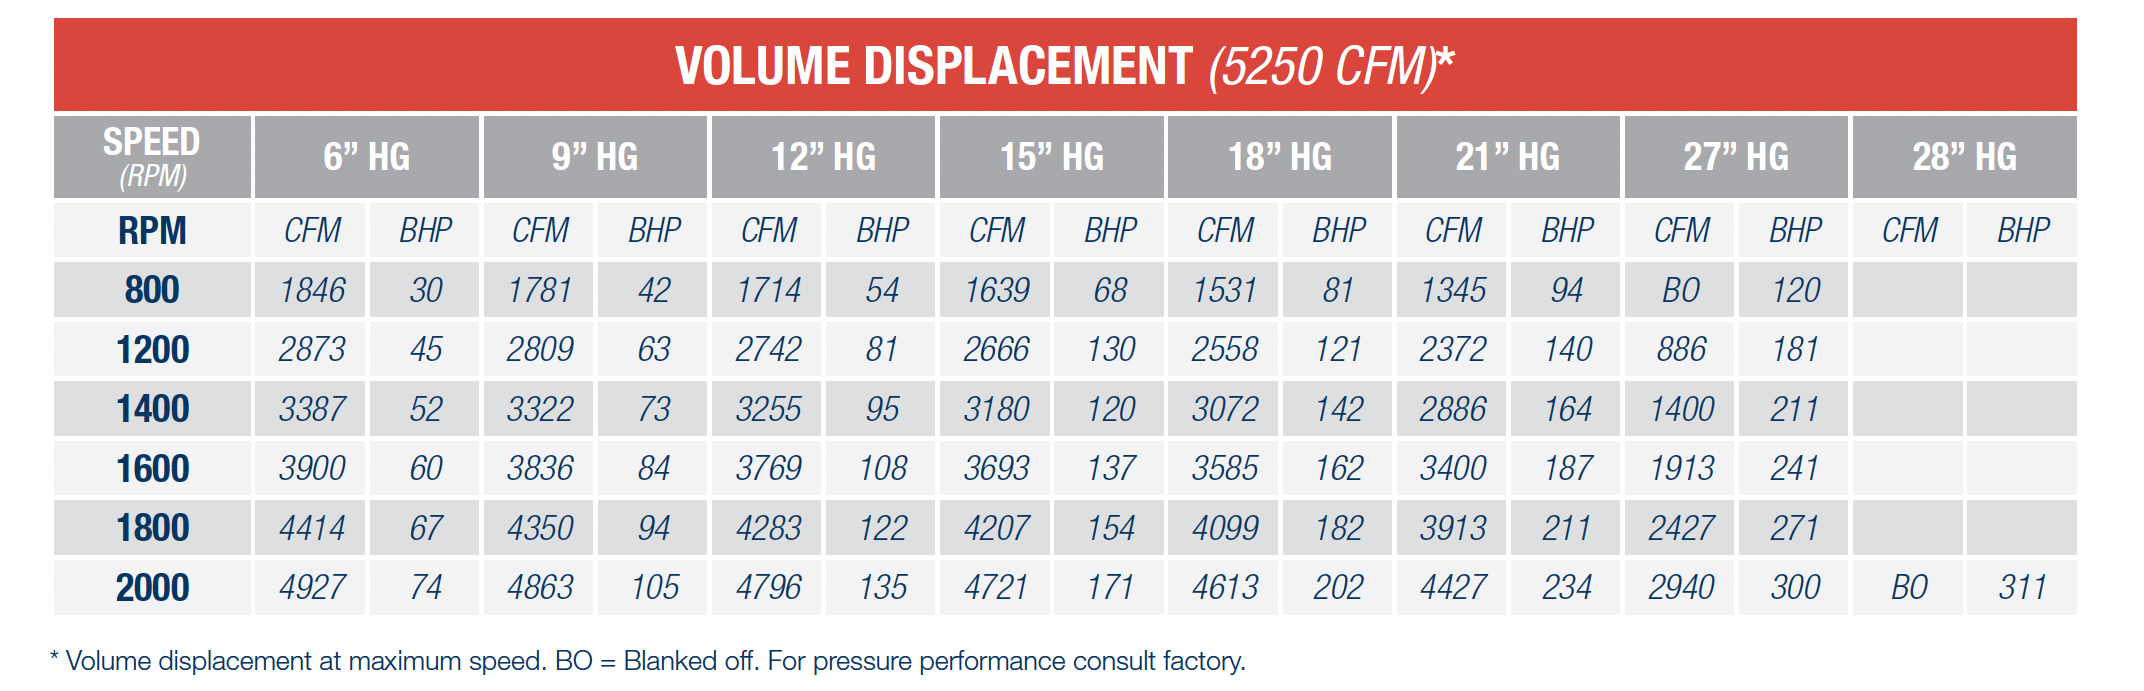 SIAV Volume Displacement Performance Chart